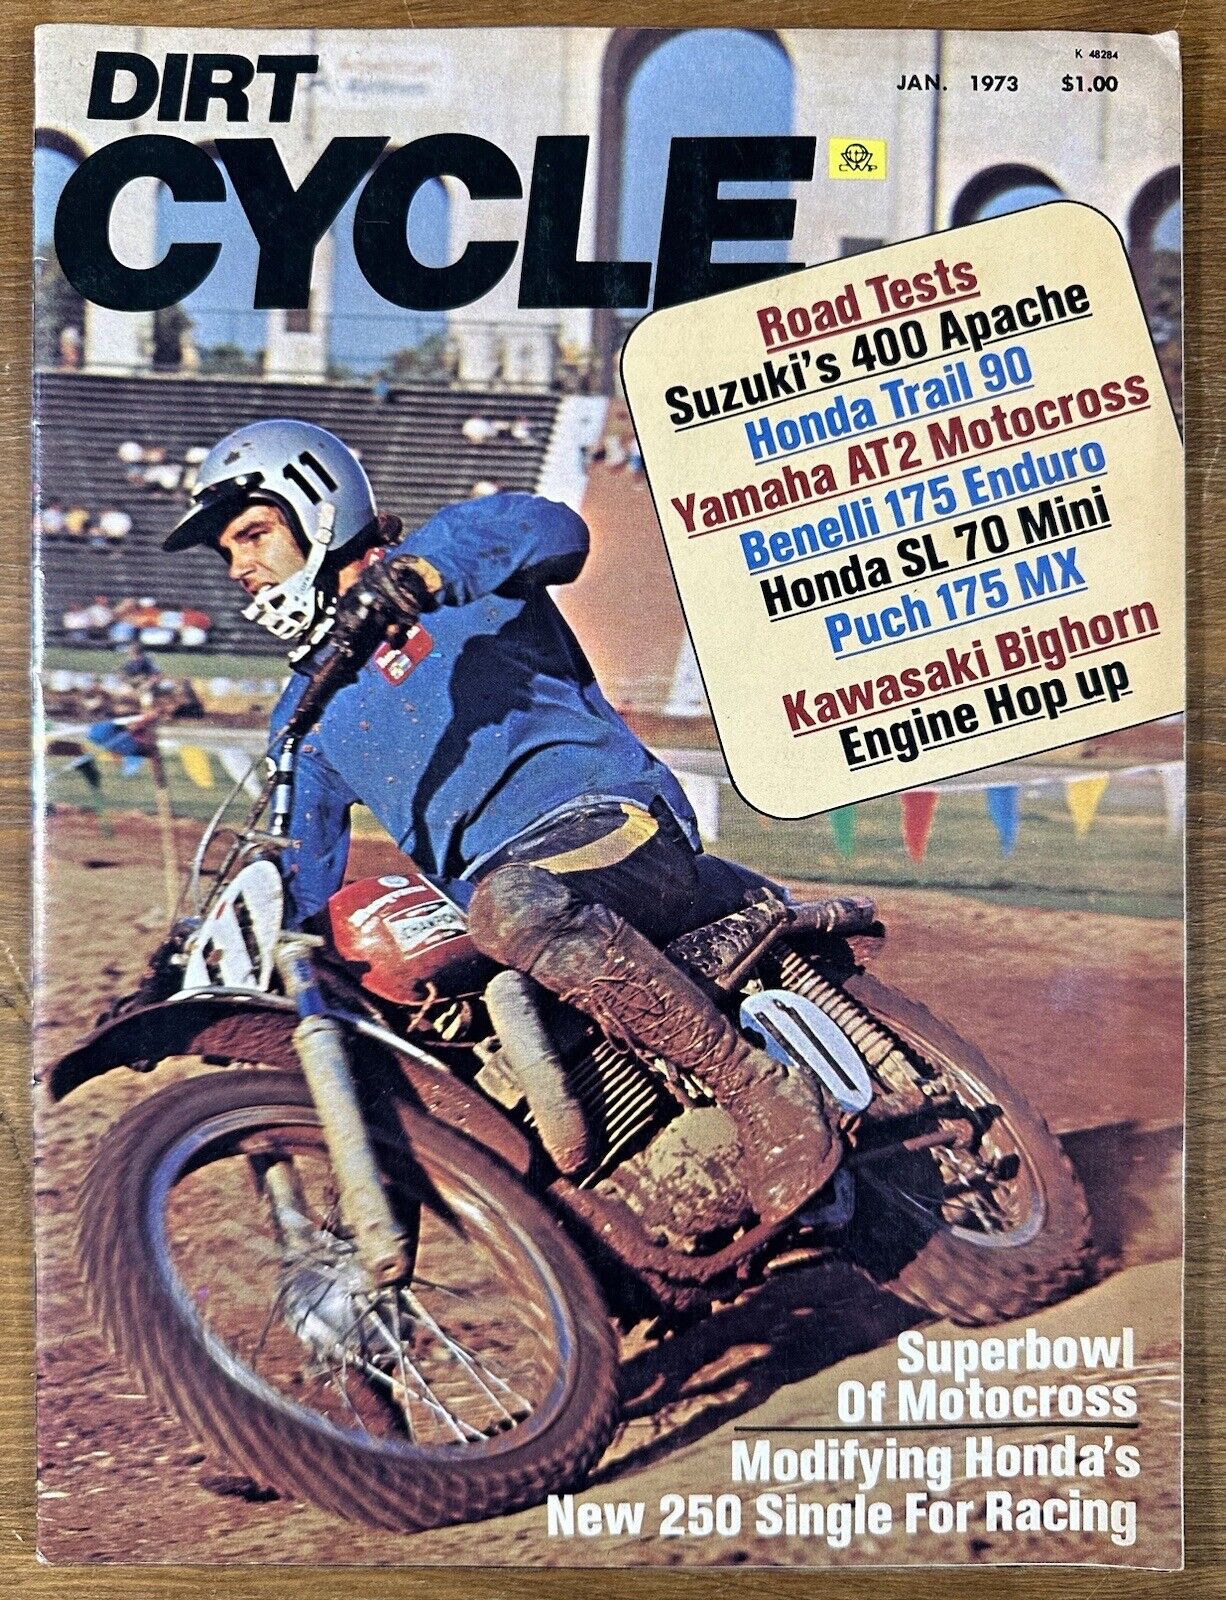 Vintage Dirt Cycle Magazine January 1973 Motorcycle Motocross Suzuki 400 Apache